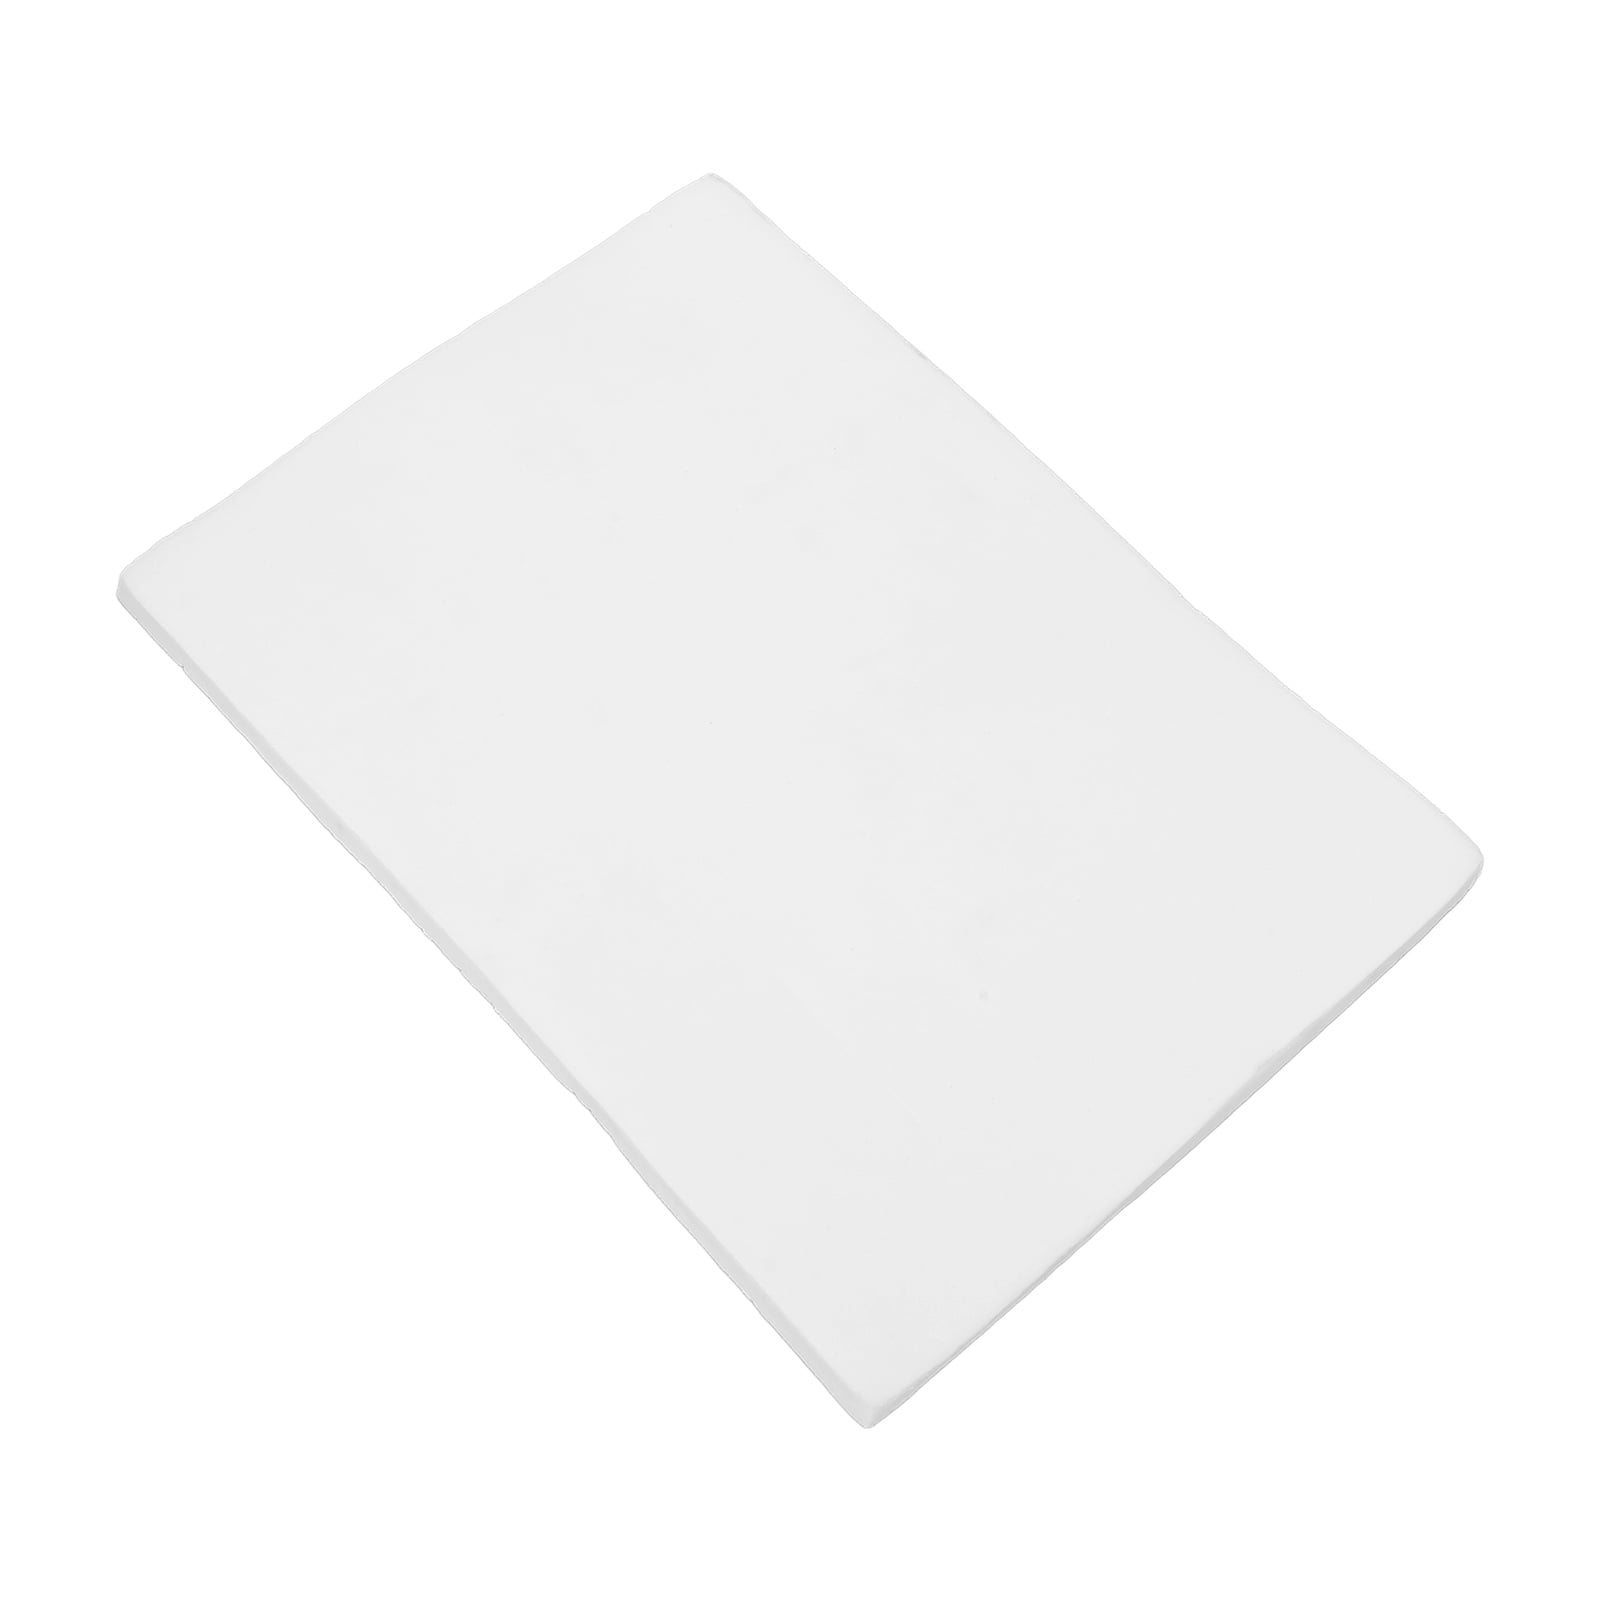 Impresa - Extra Thick Lipo Foam - Post Surgery Ab Board - Medical Grade Foam  White [3 pack] 